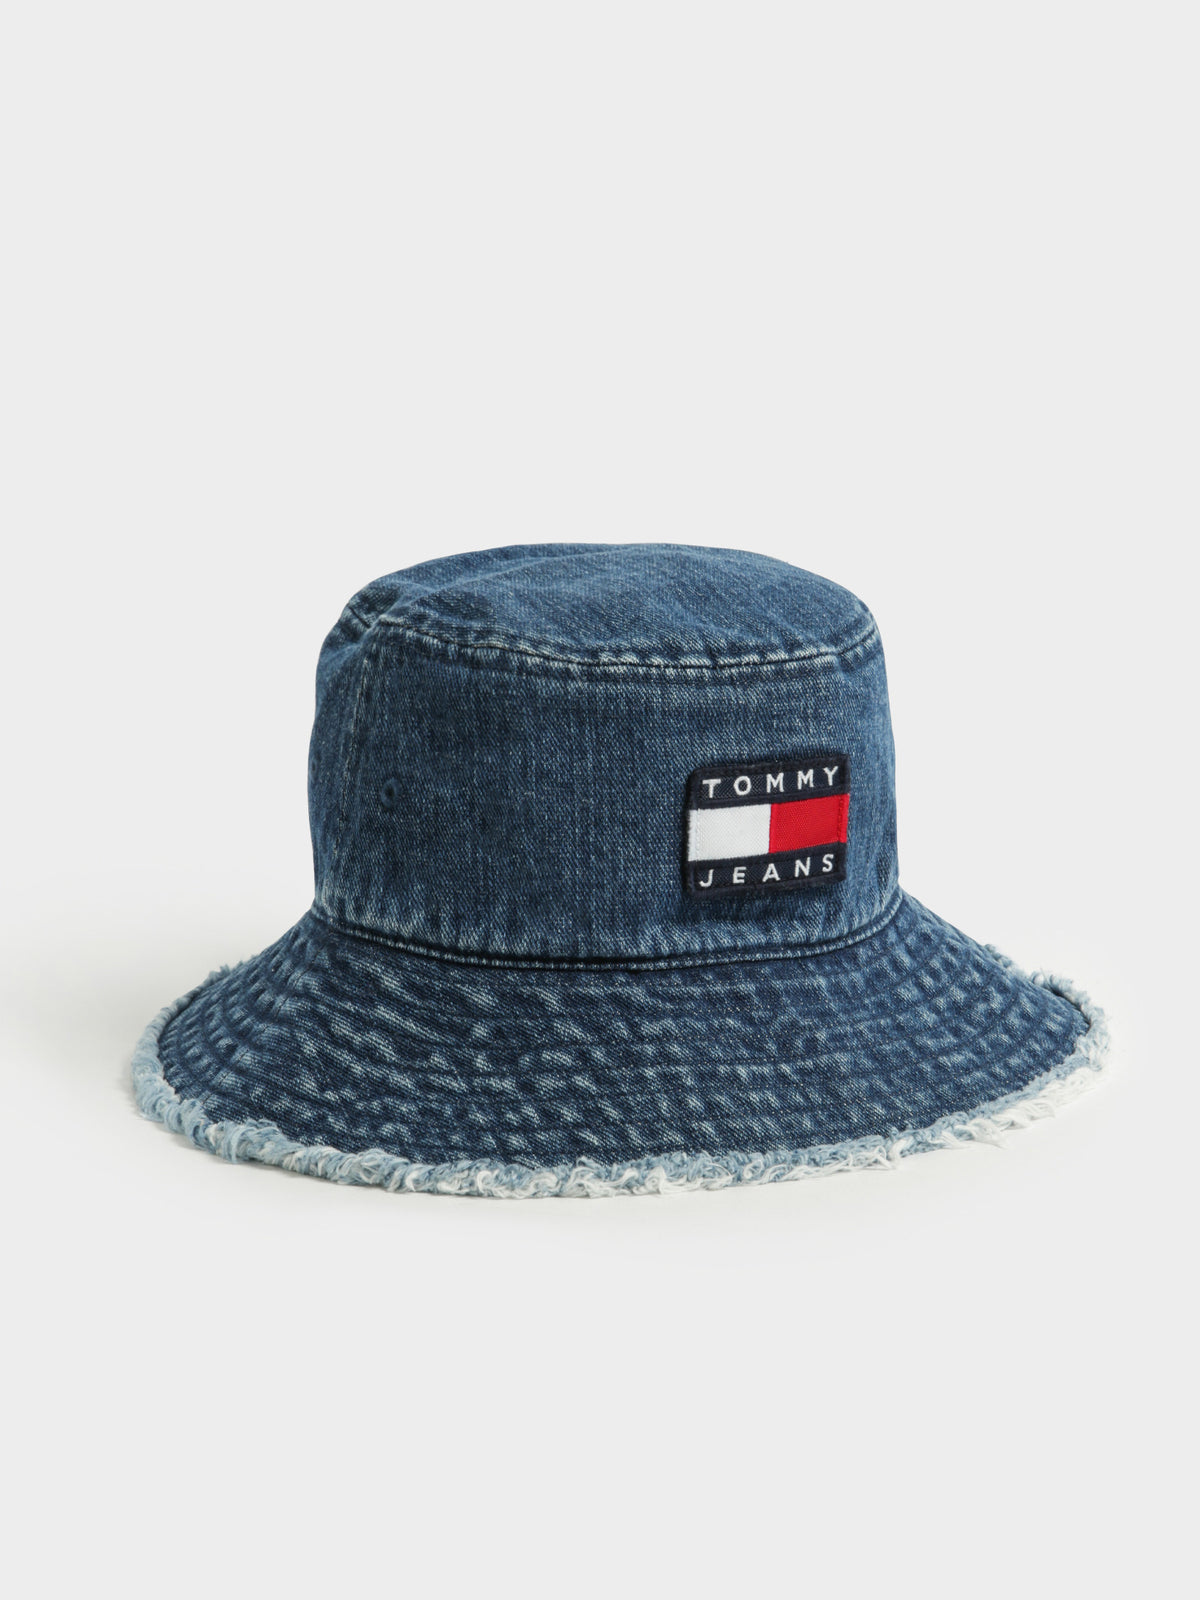 TJW Heritage Denim Bucket Hat in Blue